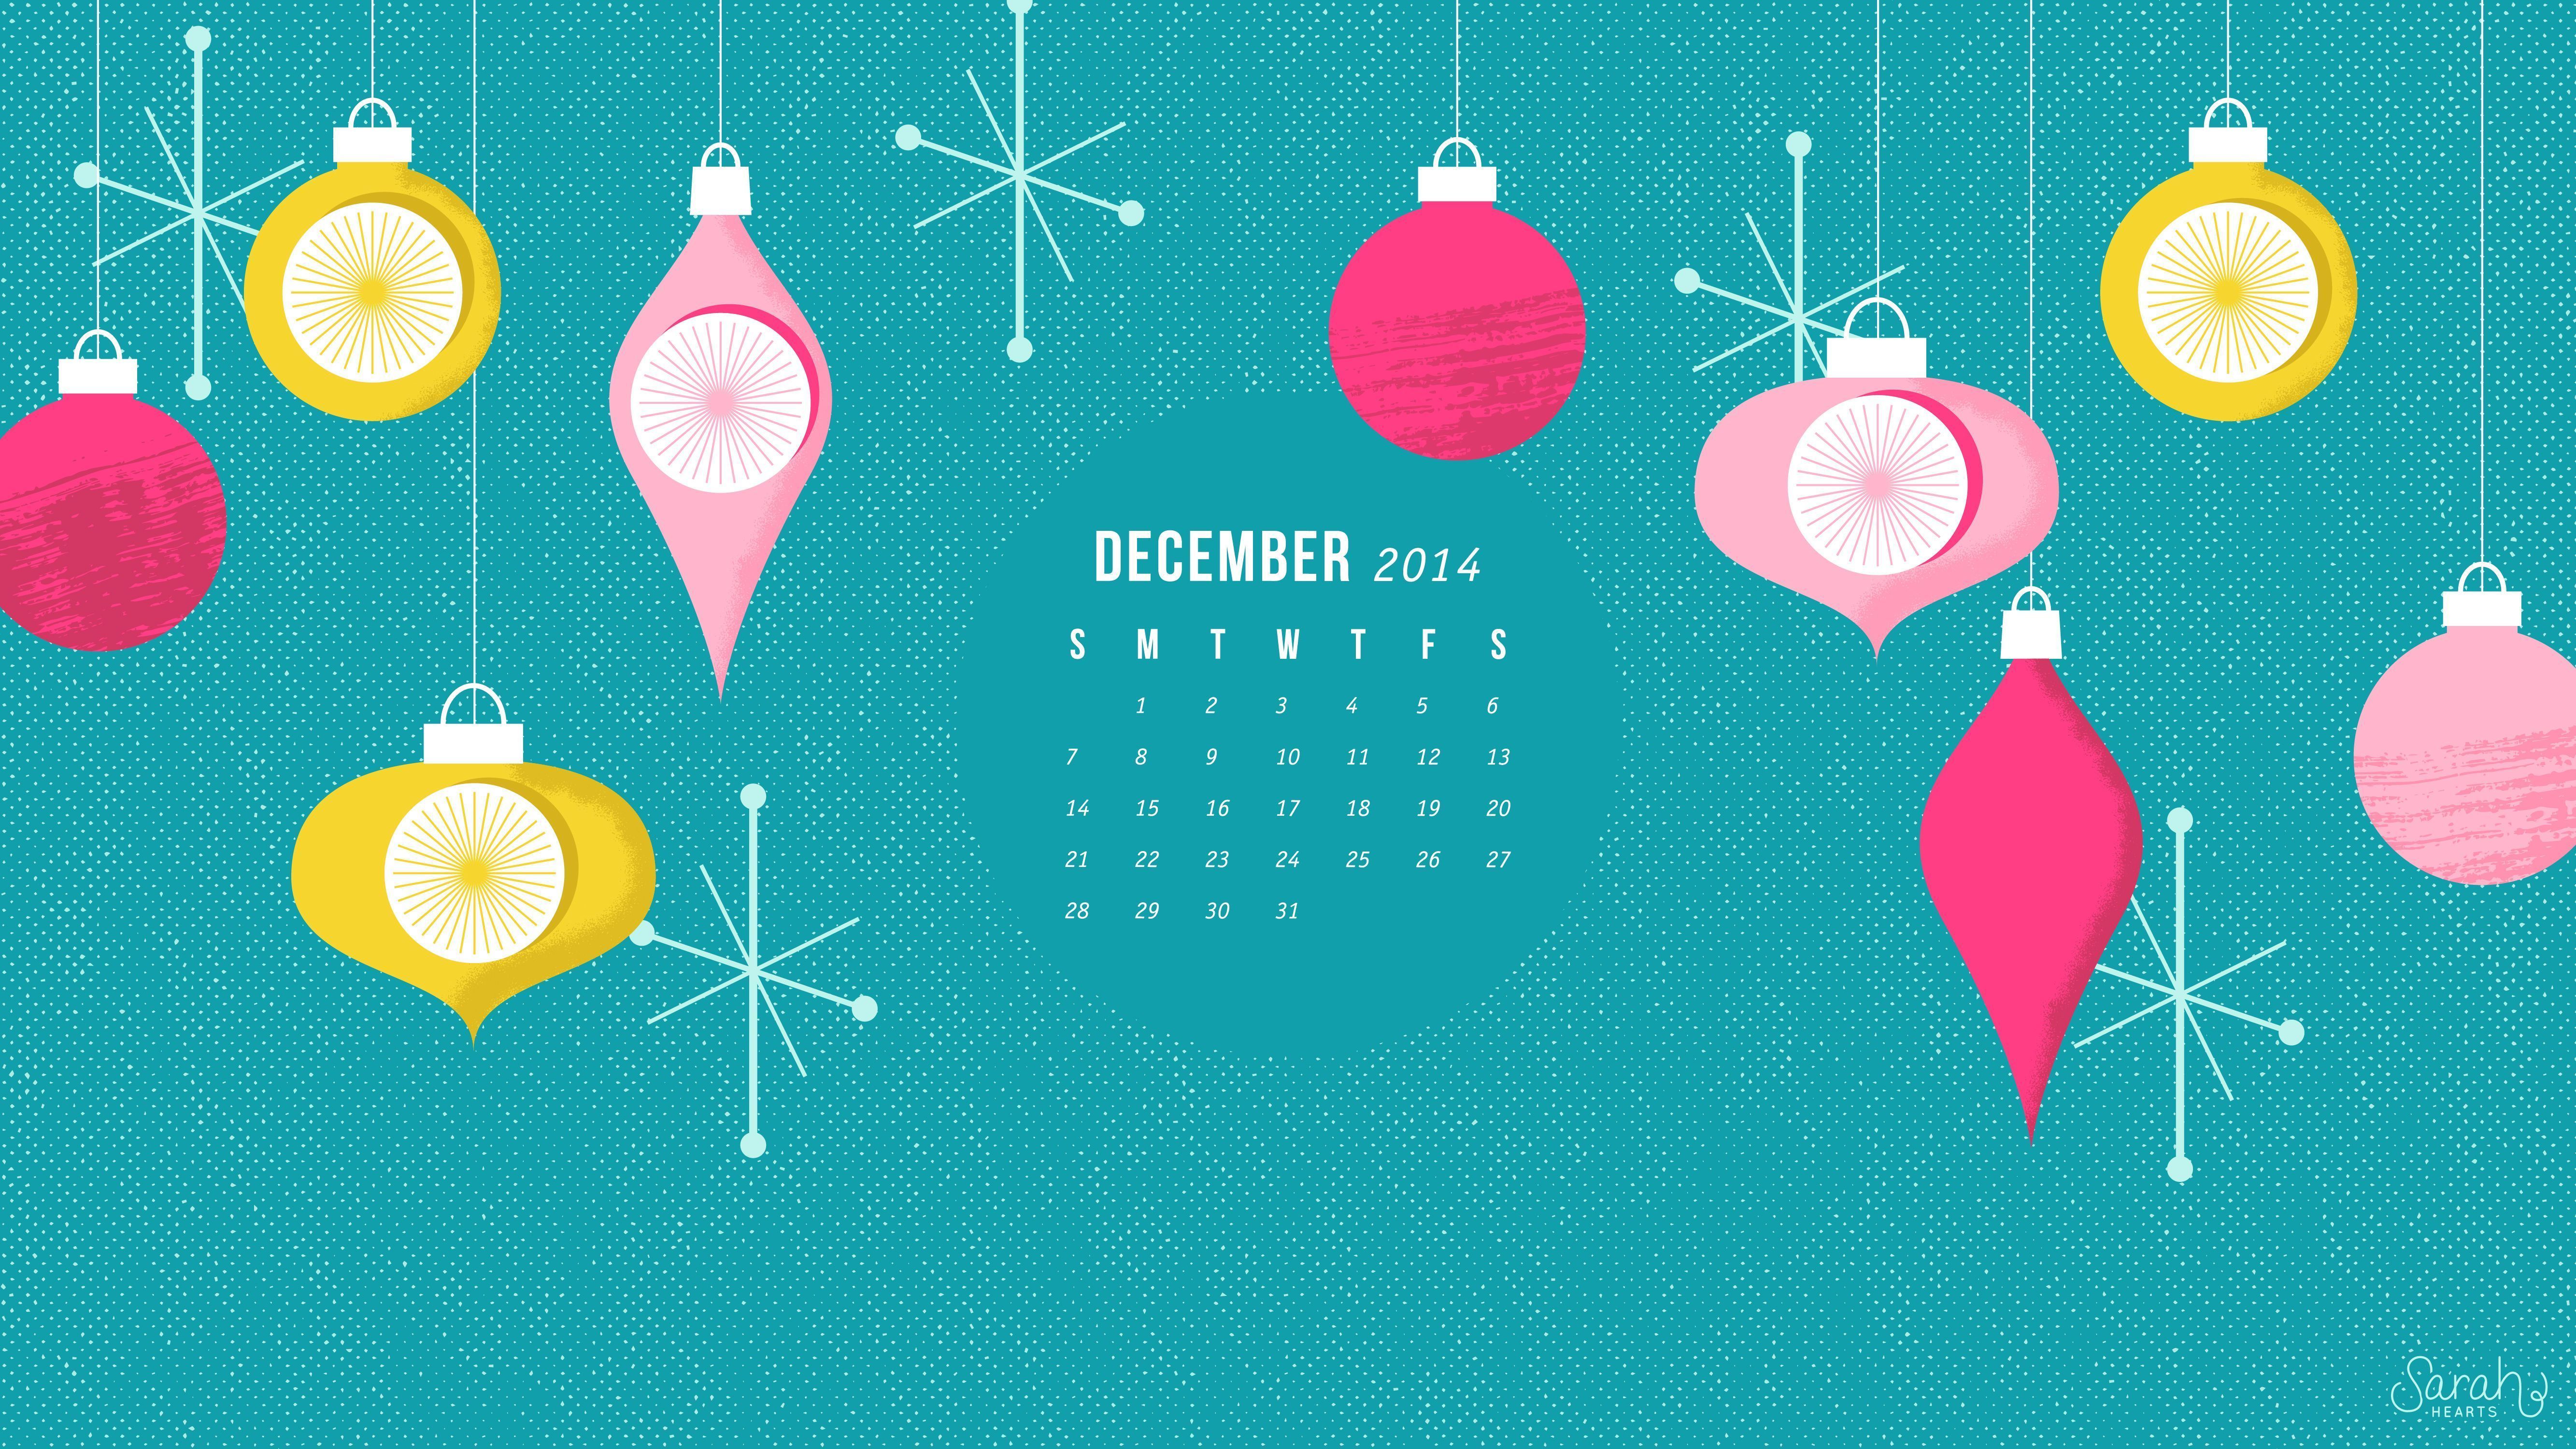 December 2014 Calendar Wallpaper - Sarah Hearts